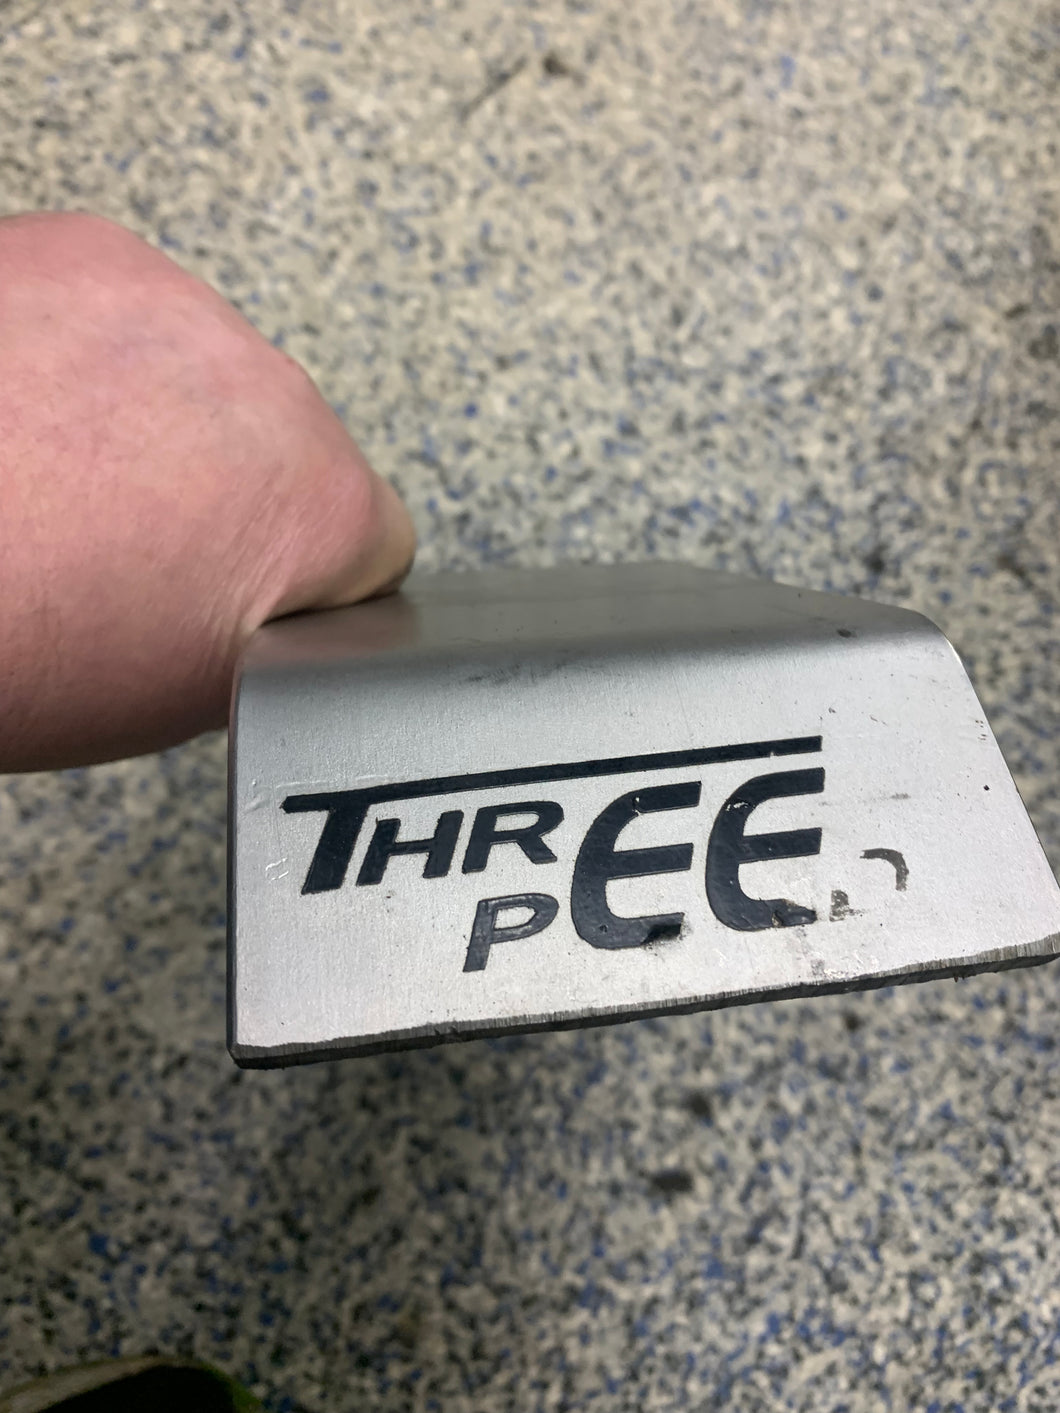 ThreeSpeed 2g Manual AWD Scatter Shield